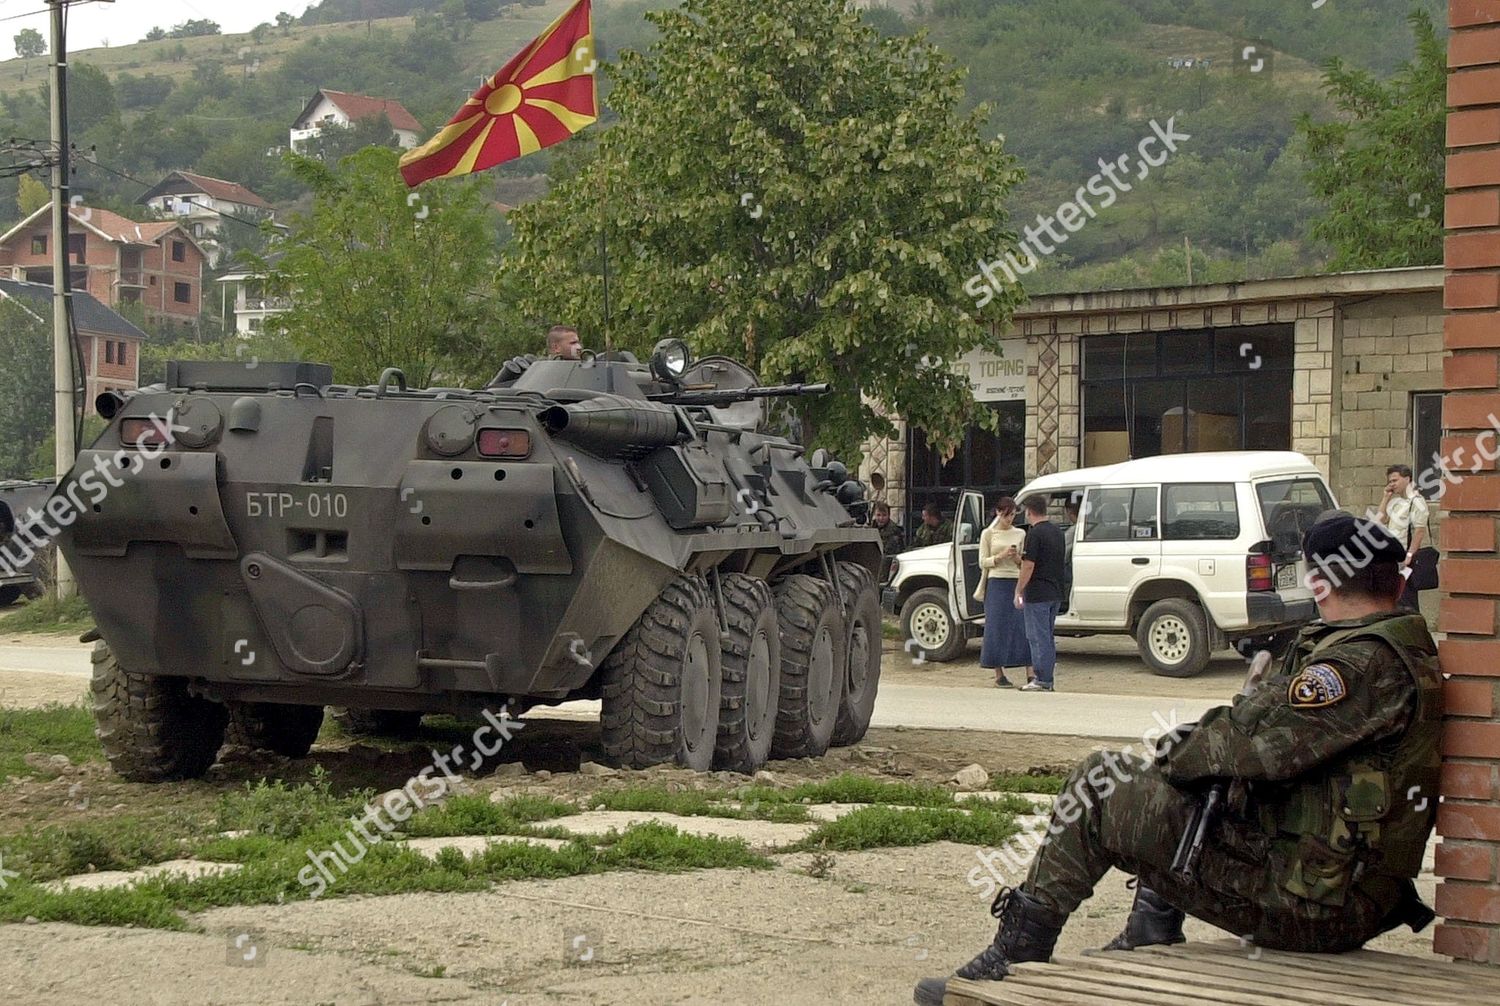 macedonia-killed-policeman-sep-2002-shutterstock-editorial-8481918a.jpg